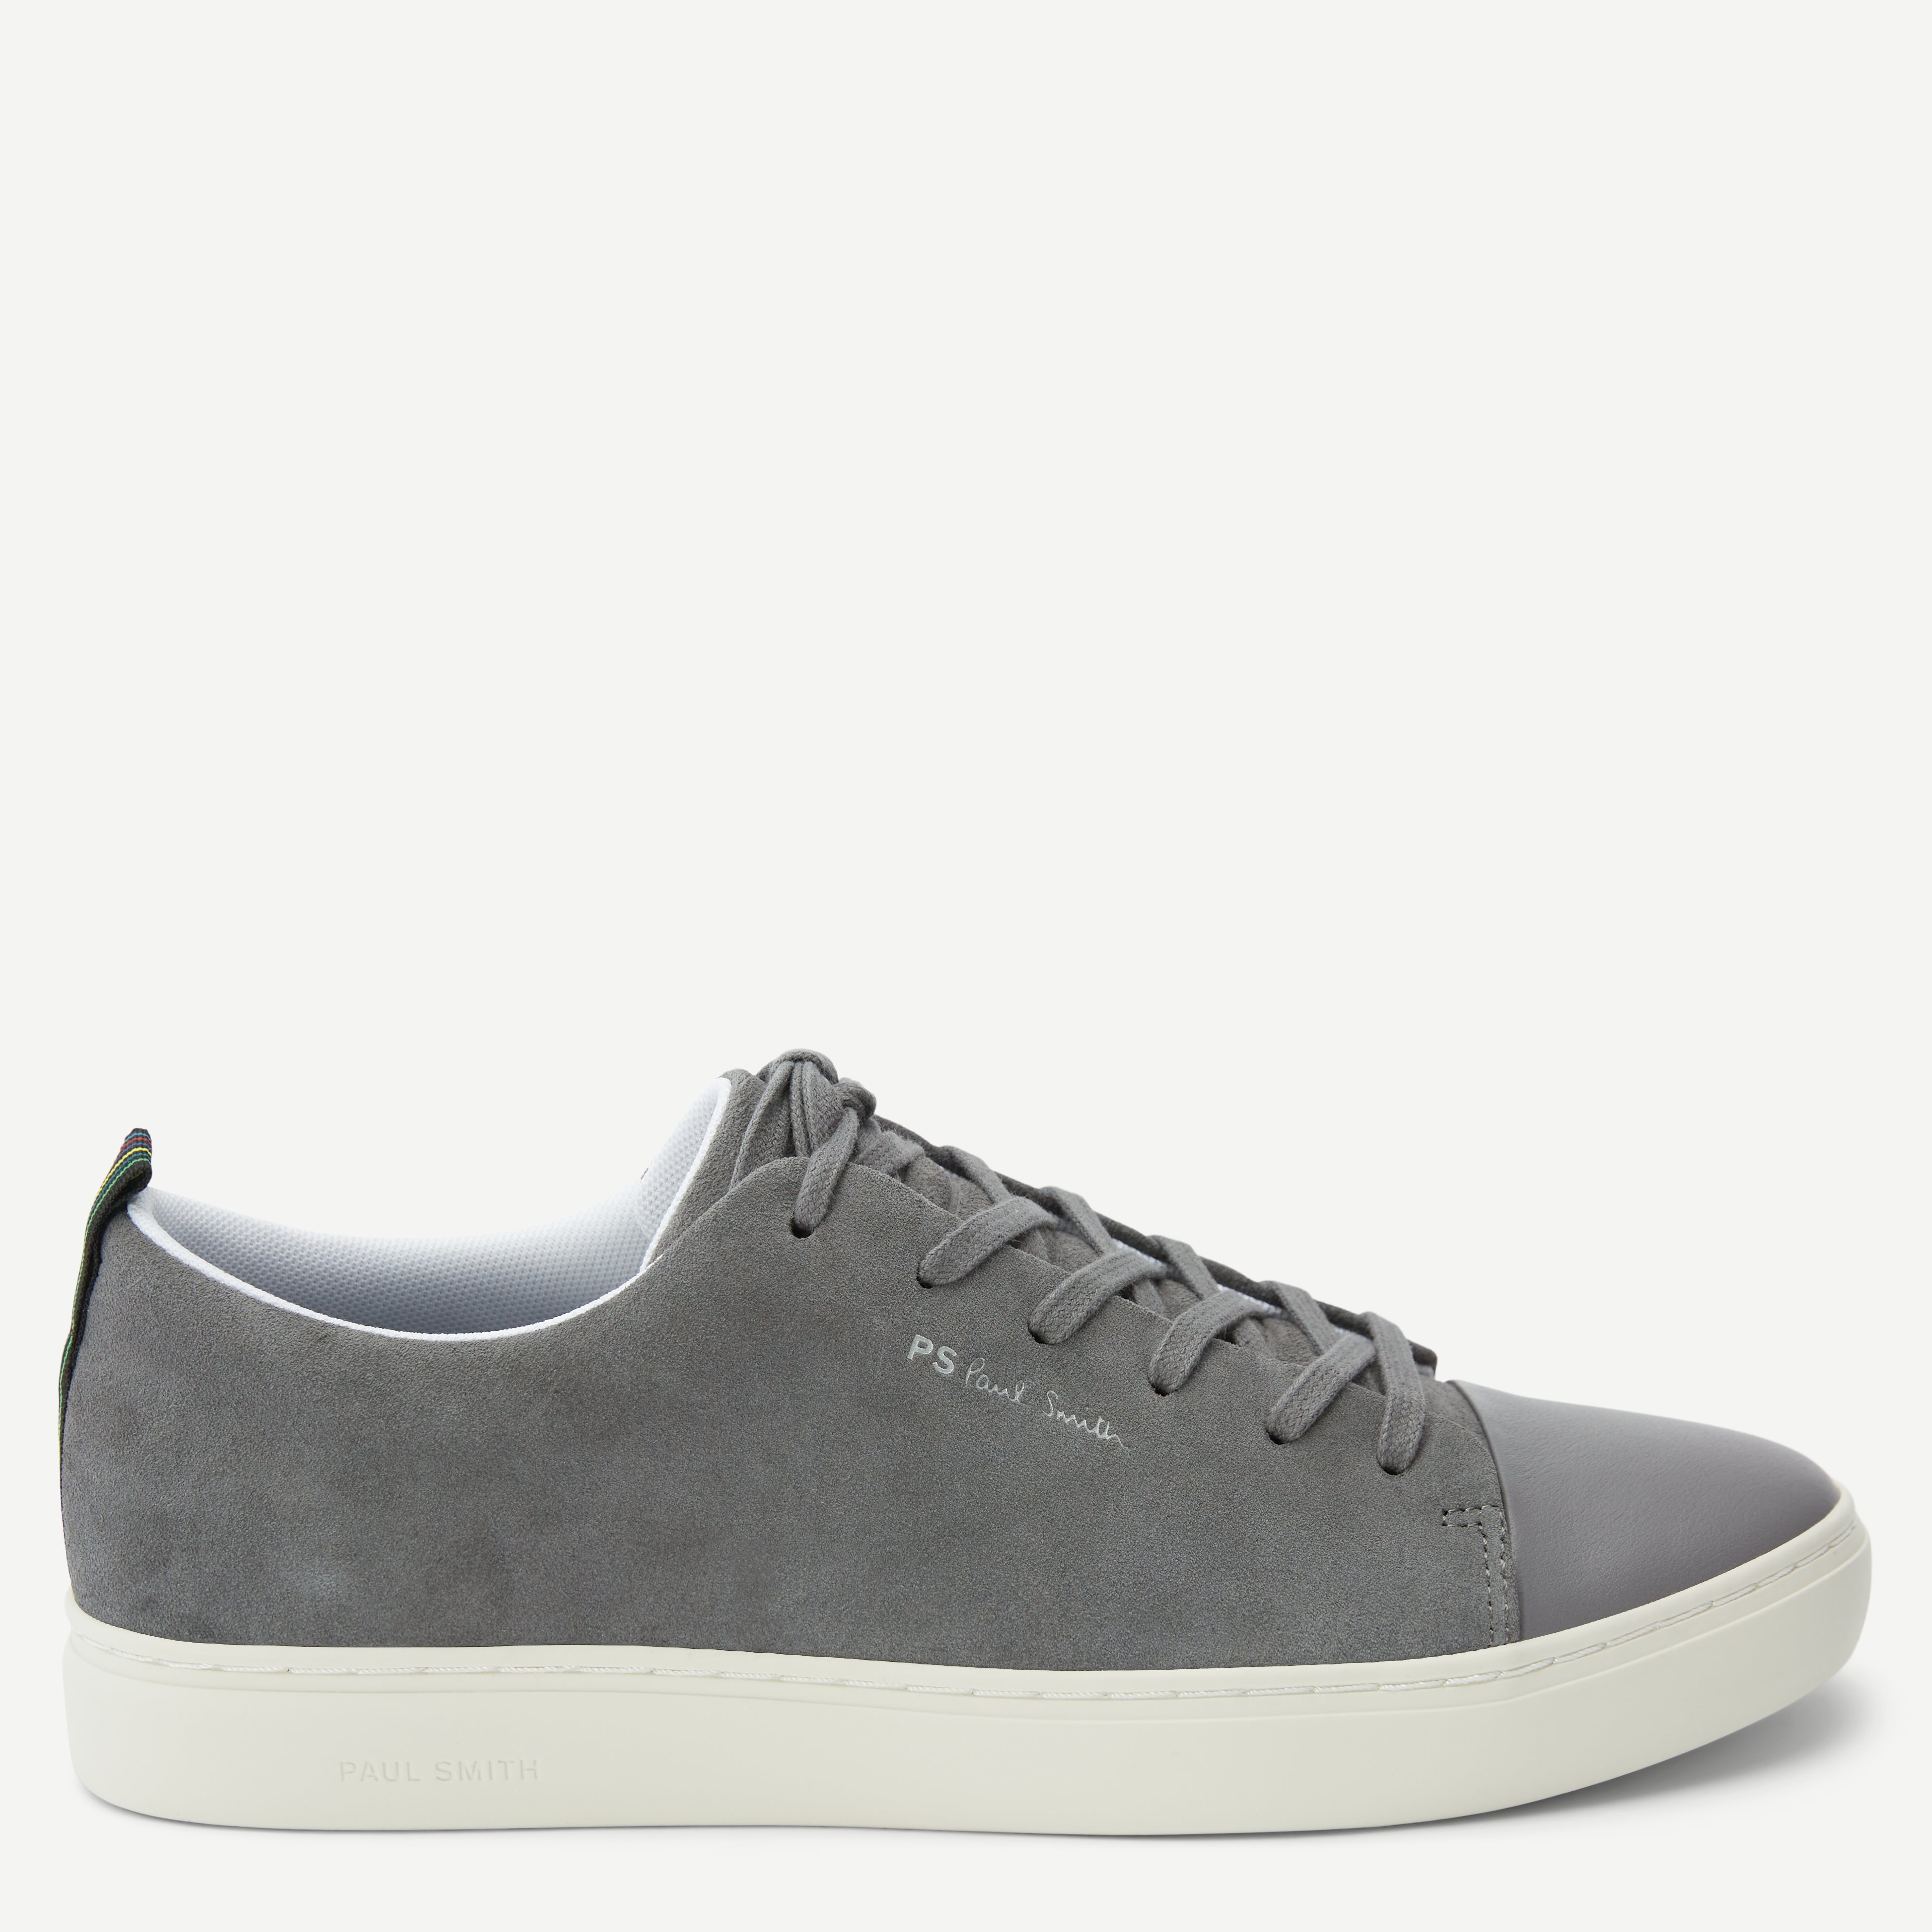 Paul Smith Shoes Shoes LEE36-MSUE MENS SHOE LEE GREY Grey